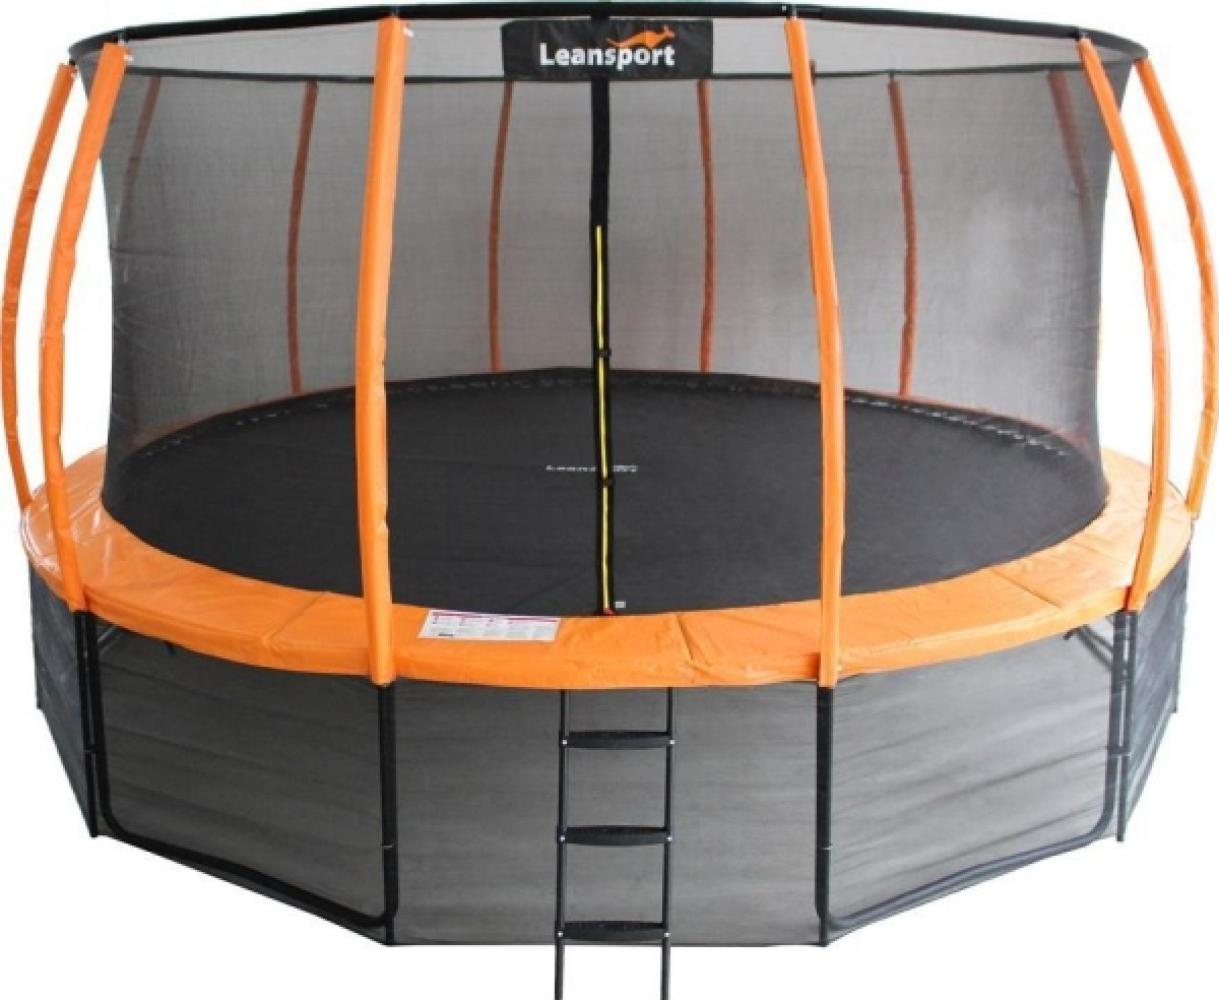 Trampoline Lean Sport 487 cm orange Bild 1